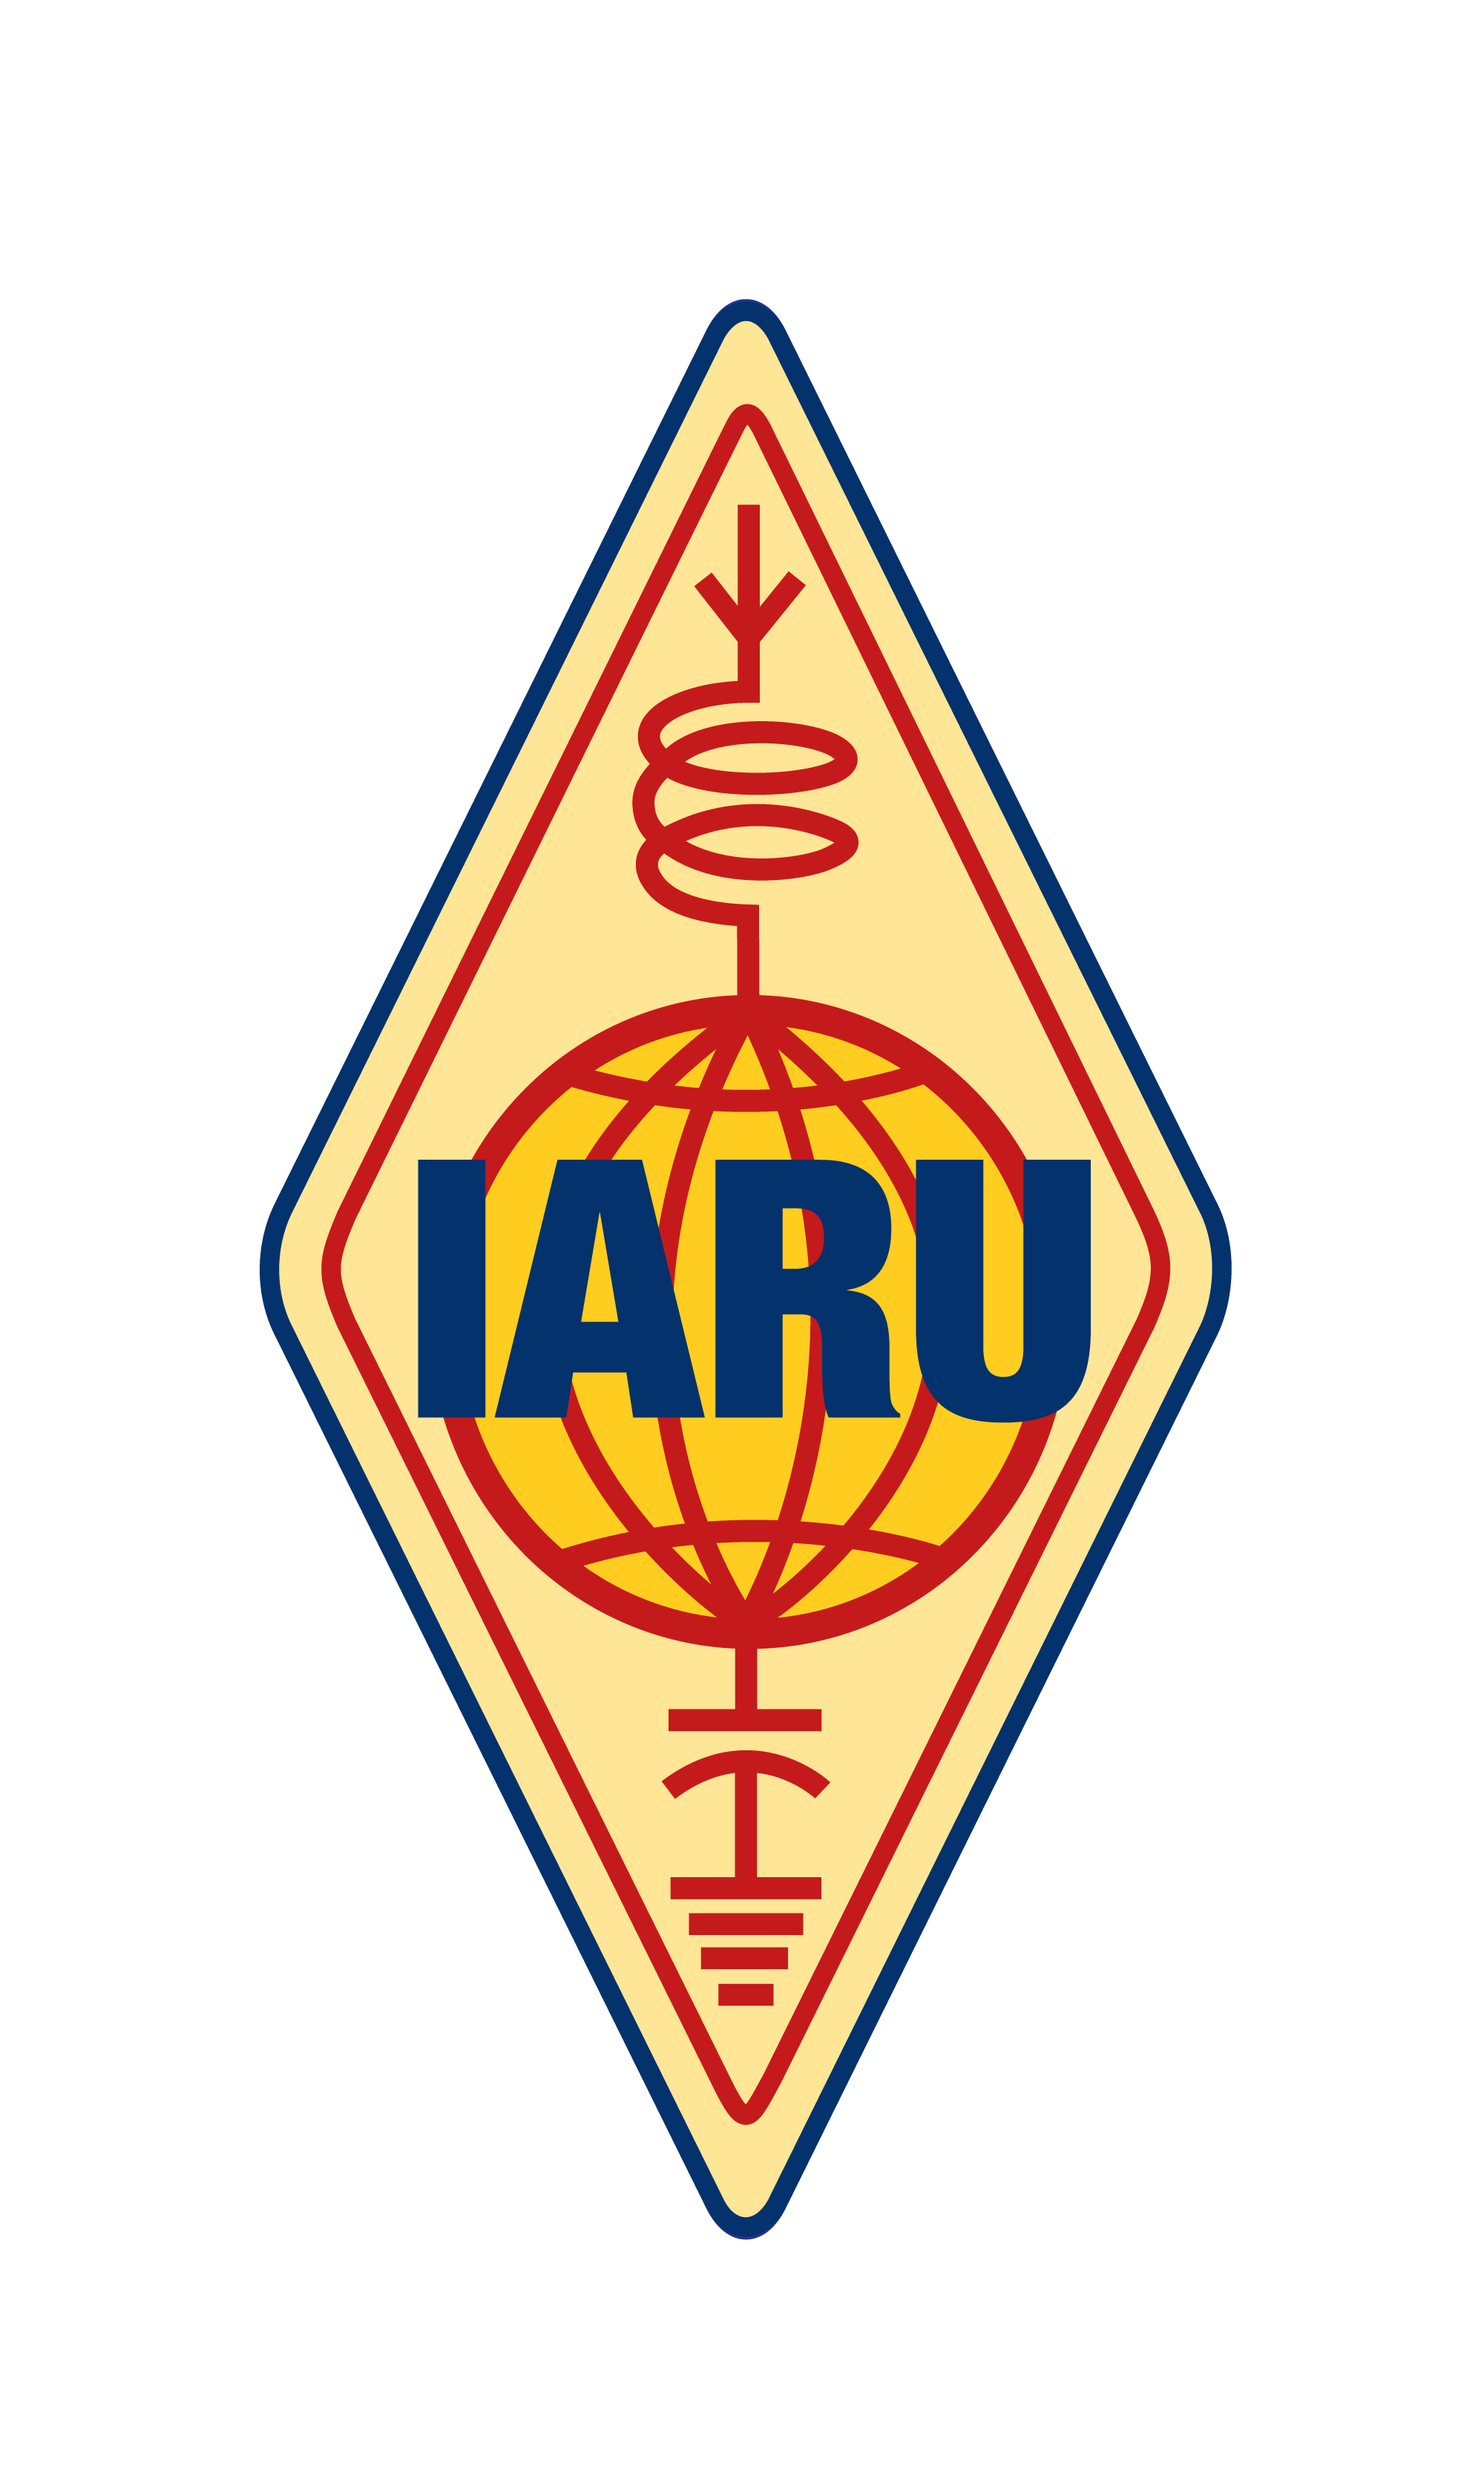 IARU Logo cleaned up